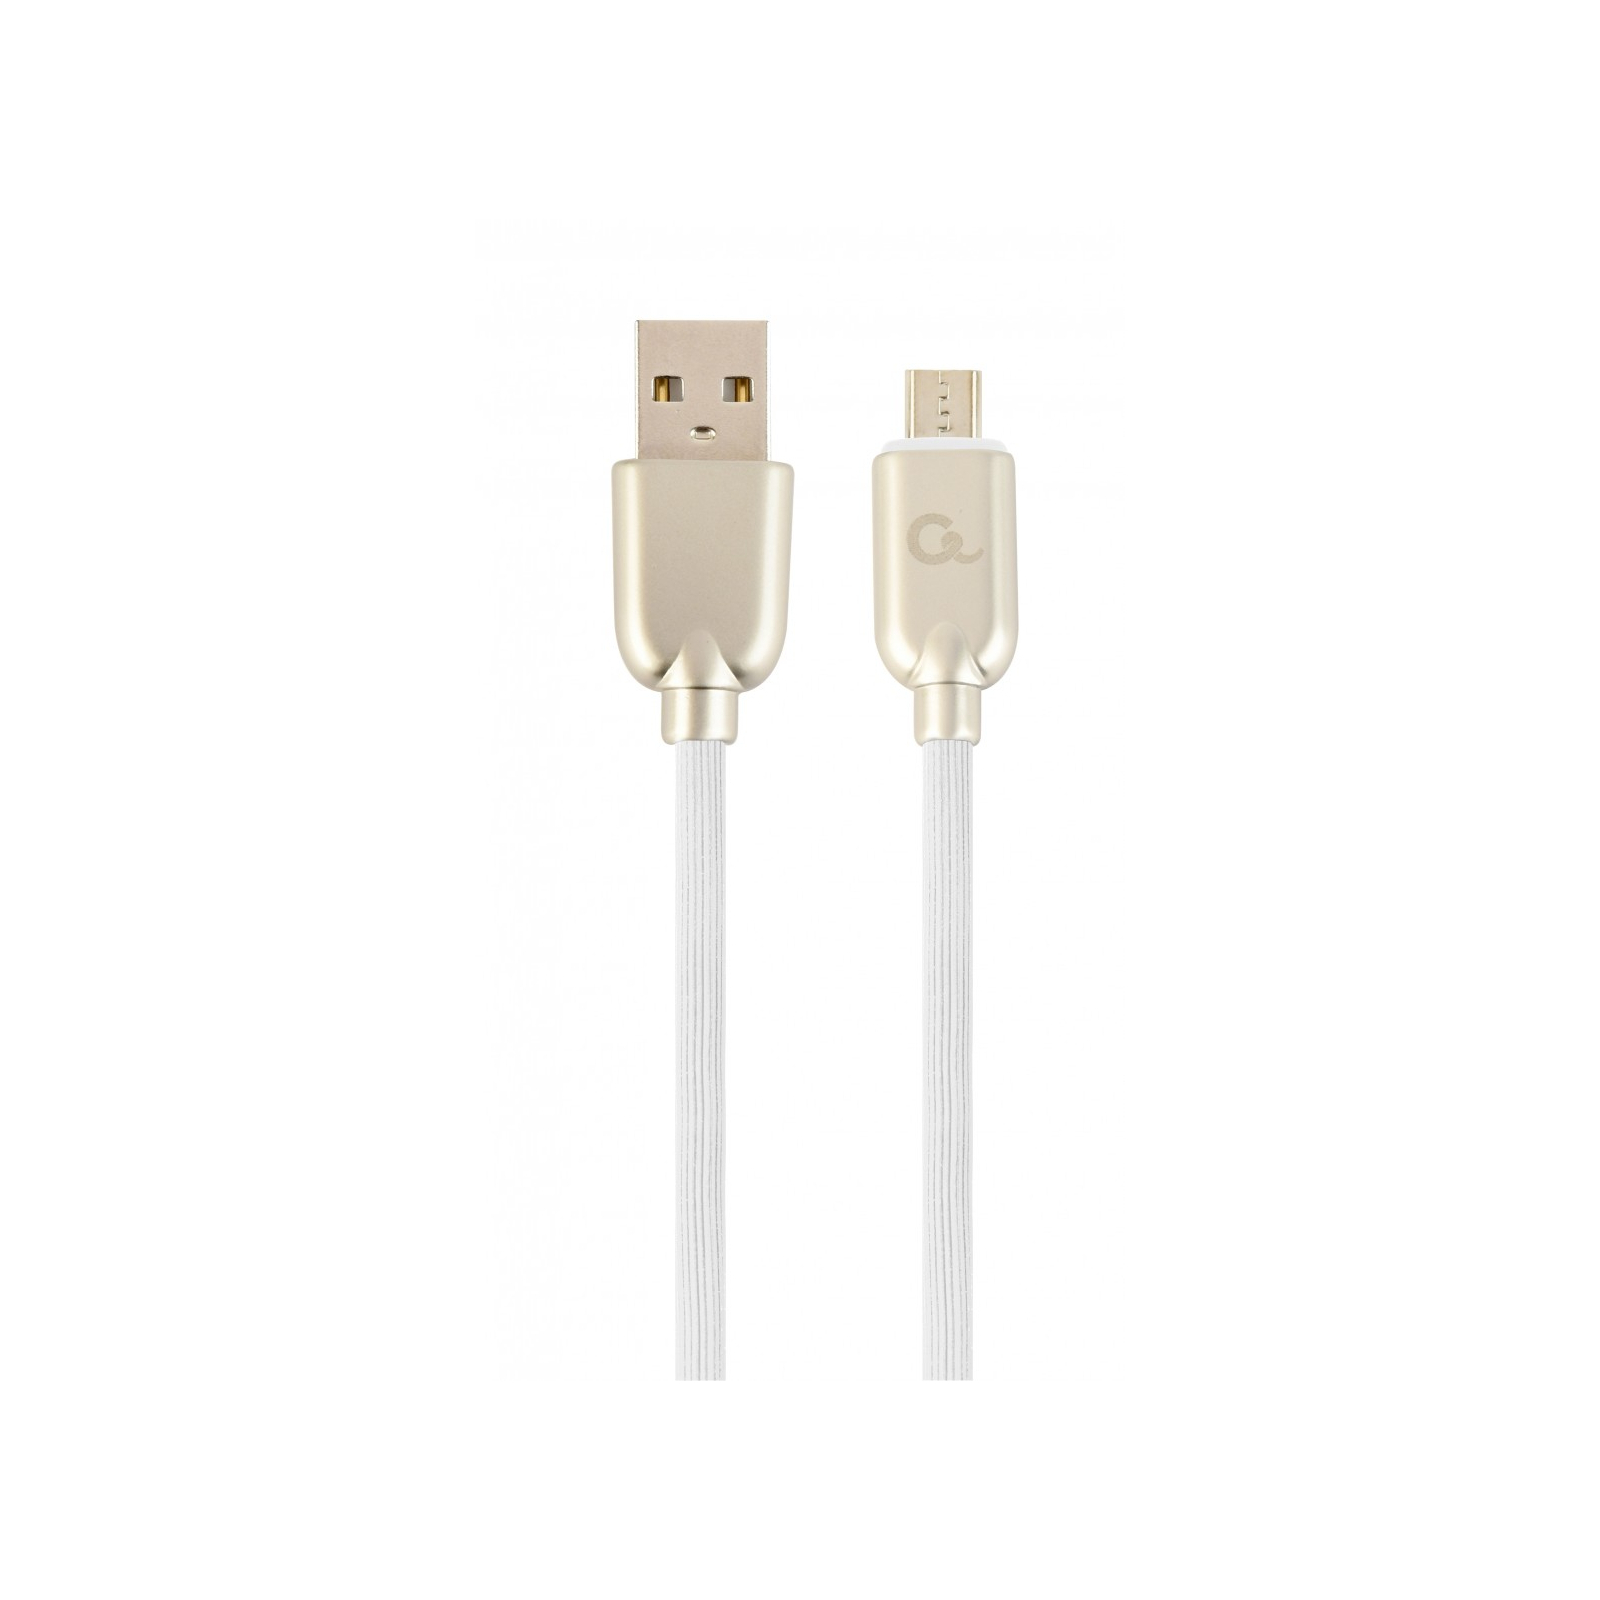 Дата кабель USB 2.0 Micro 5P to AM Cablexpert (CC-USB2R-AMmBM-2M-W)